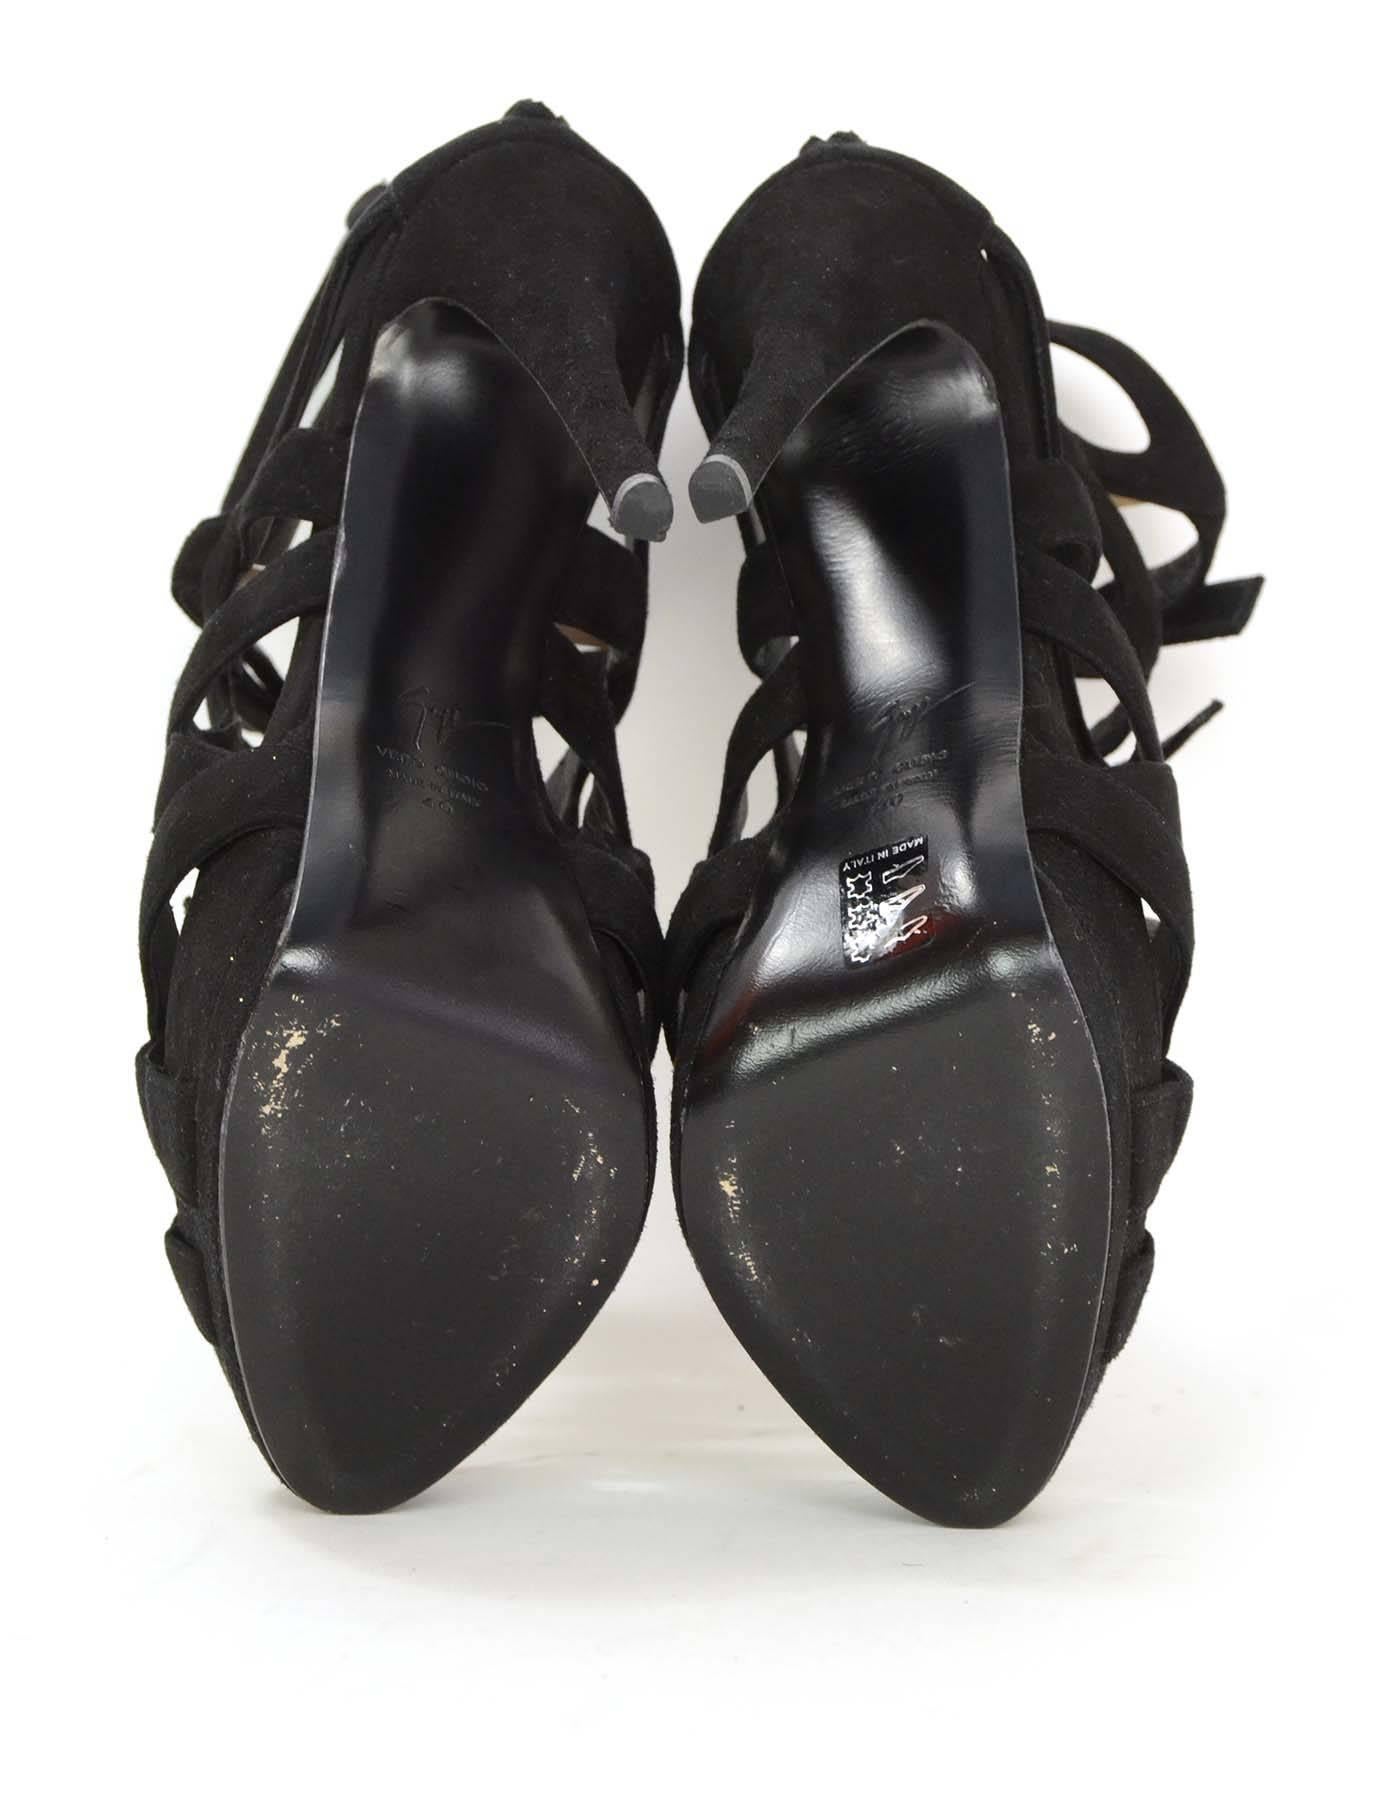 Giuseppe Zanotti Black Suede Strappy Platform Sandals sz 40 2